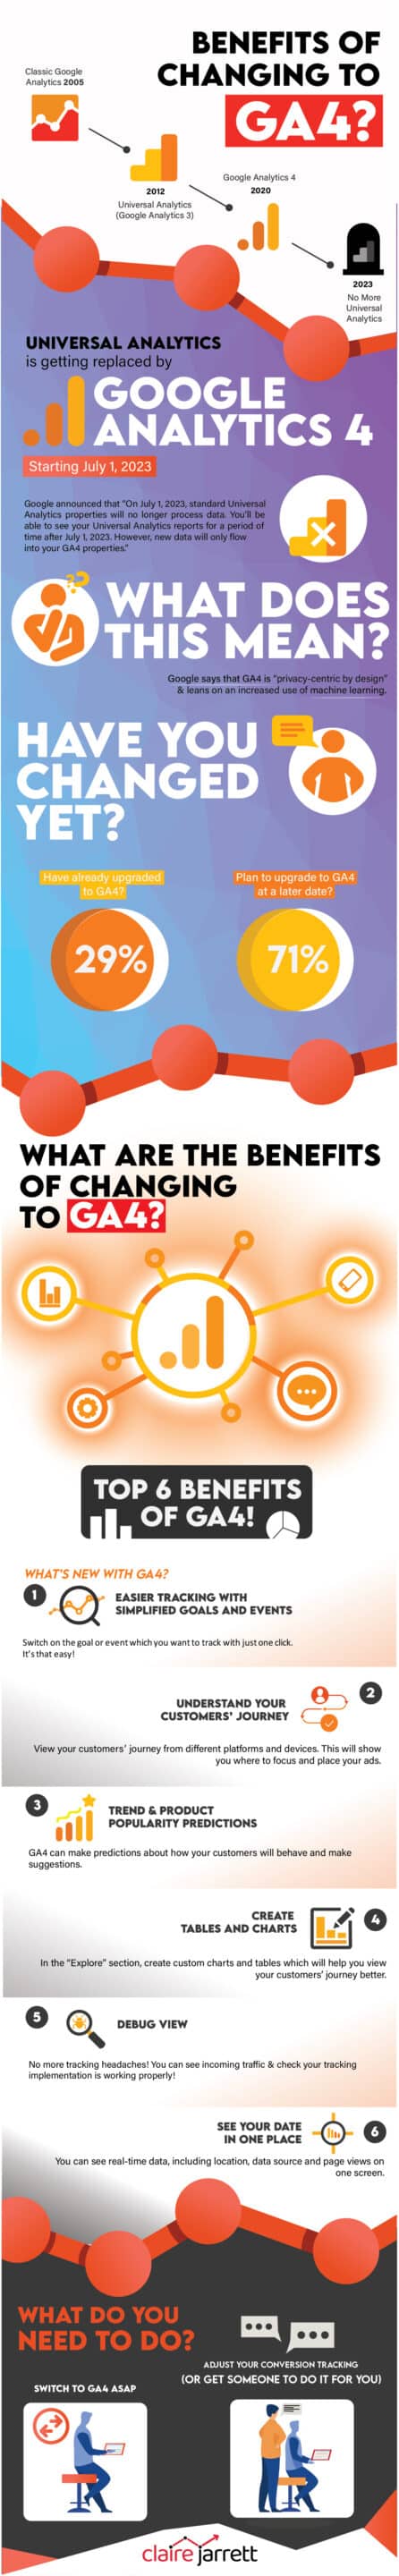 Top 6 benefits of Google Analytics 4 GA4 infographic